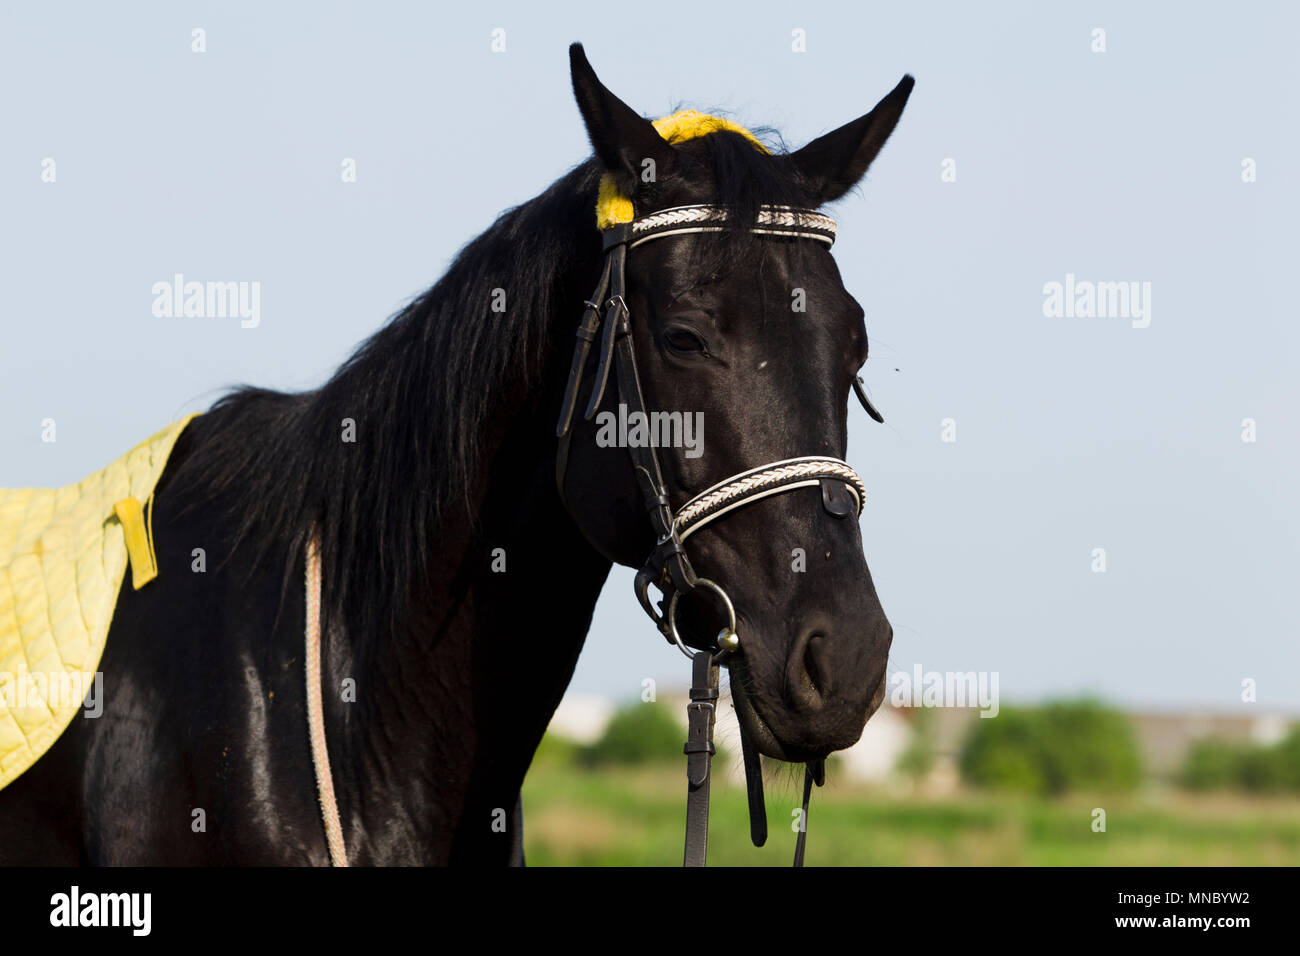 Black horse with yellow saddle blanket and bridle, gazing back sunny summer day. Stock Photo